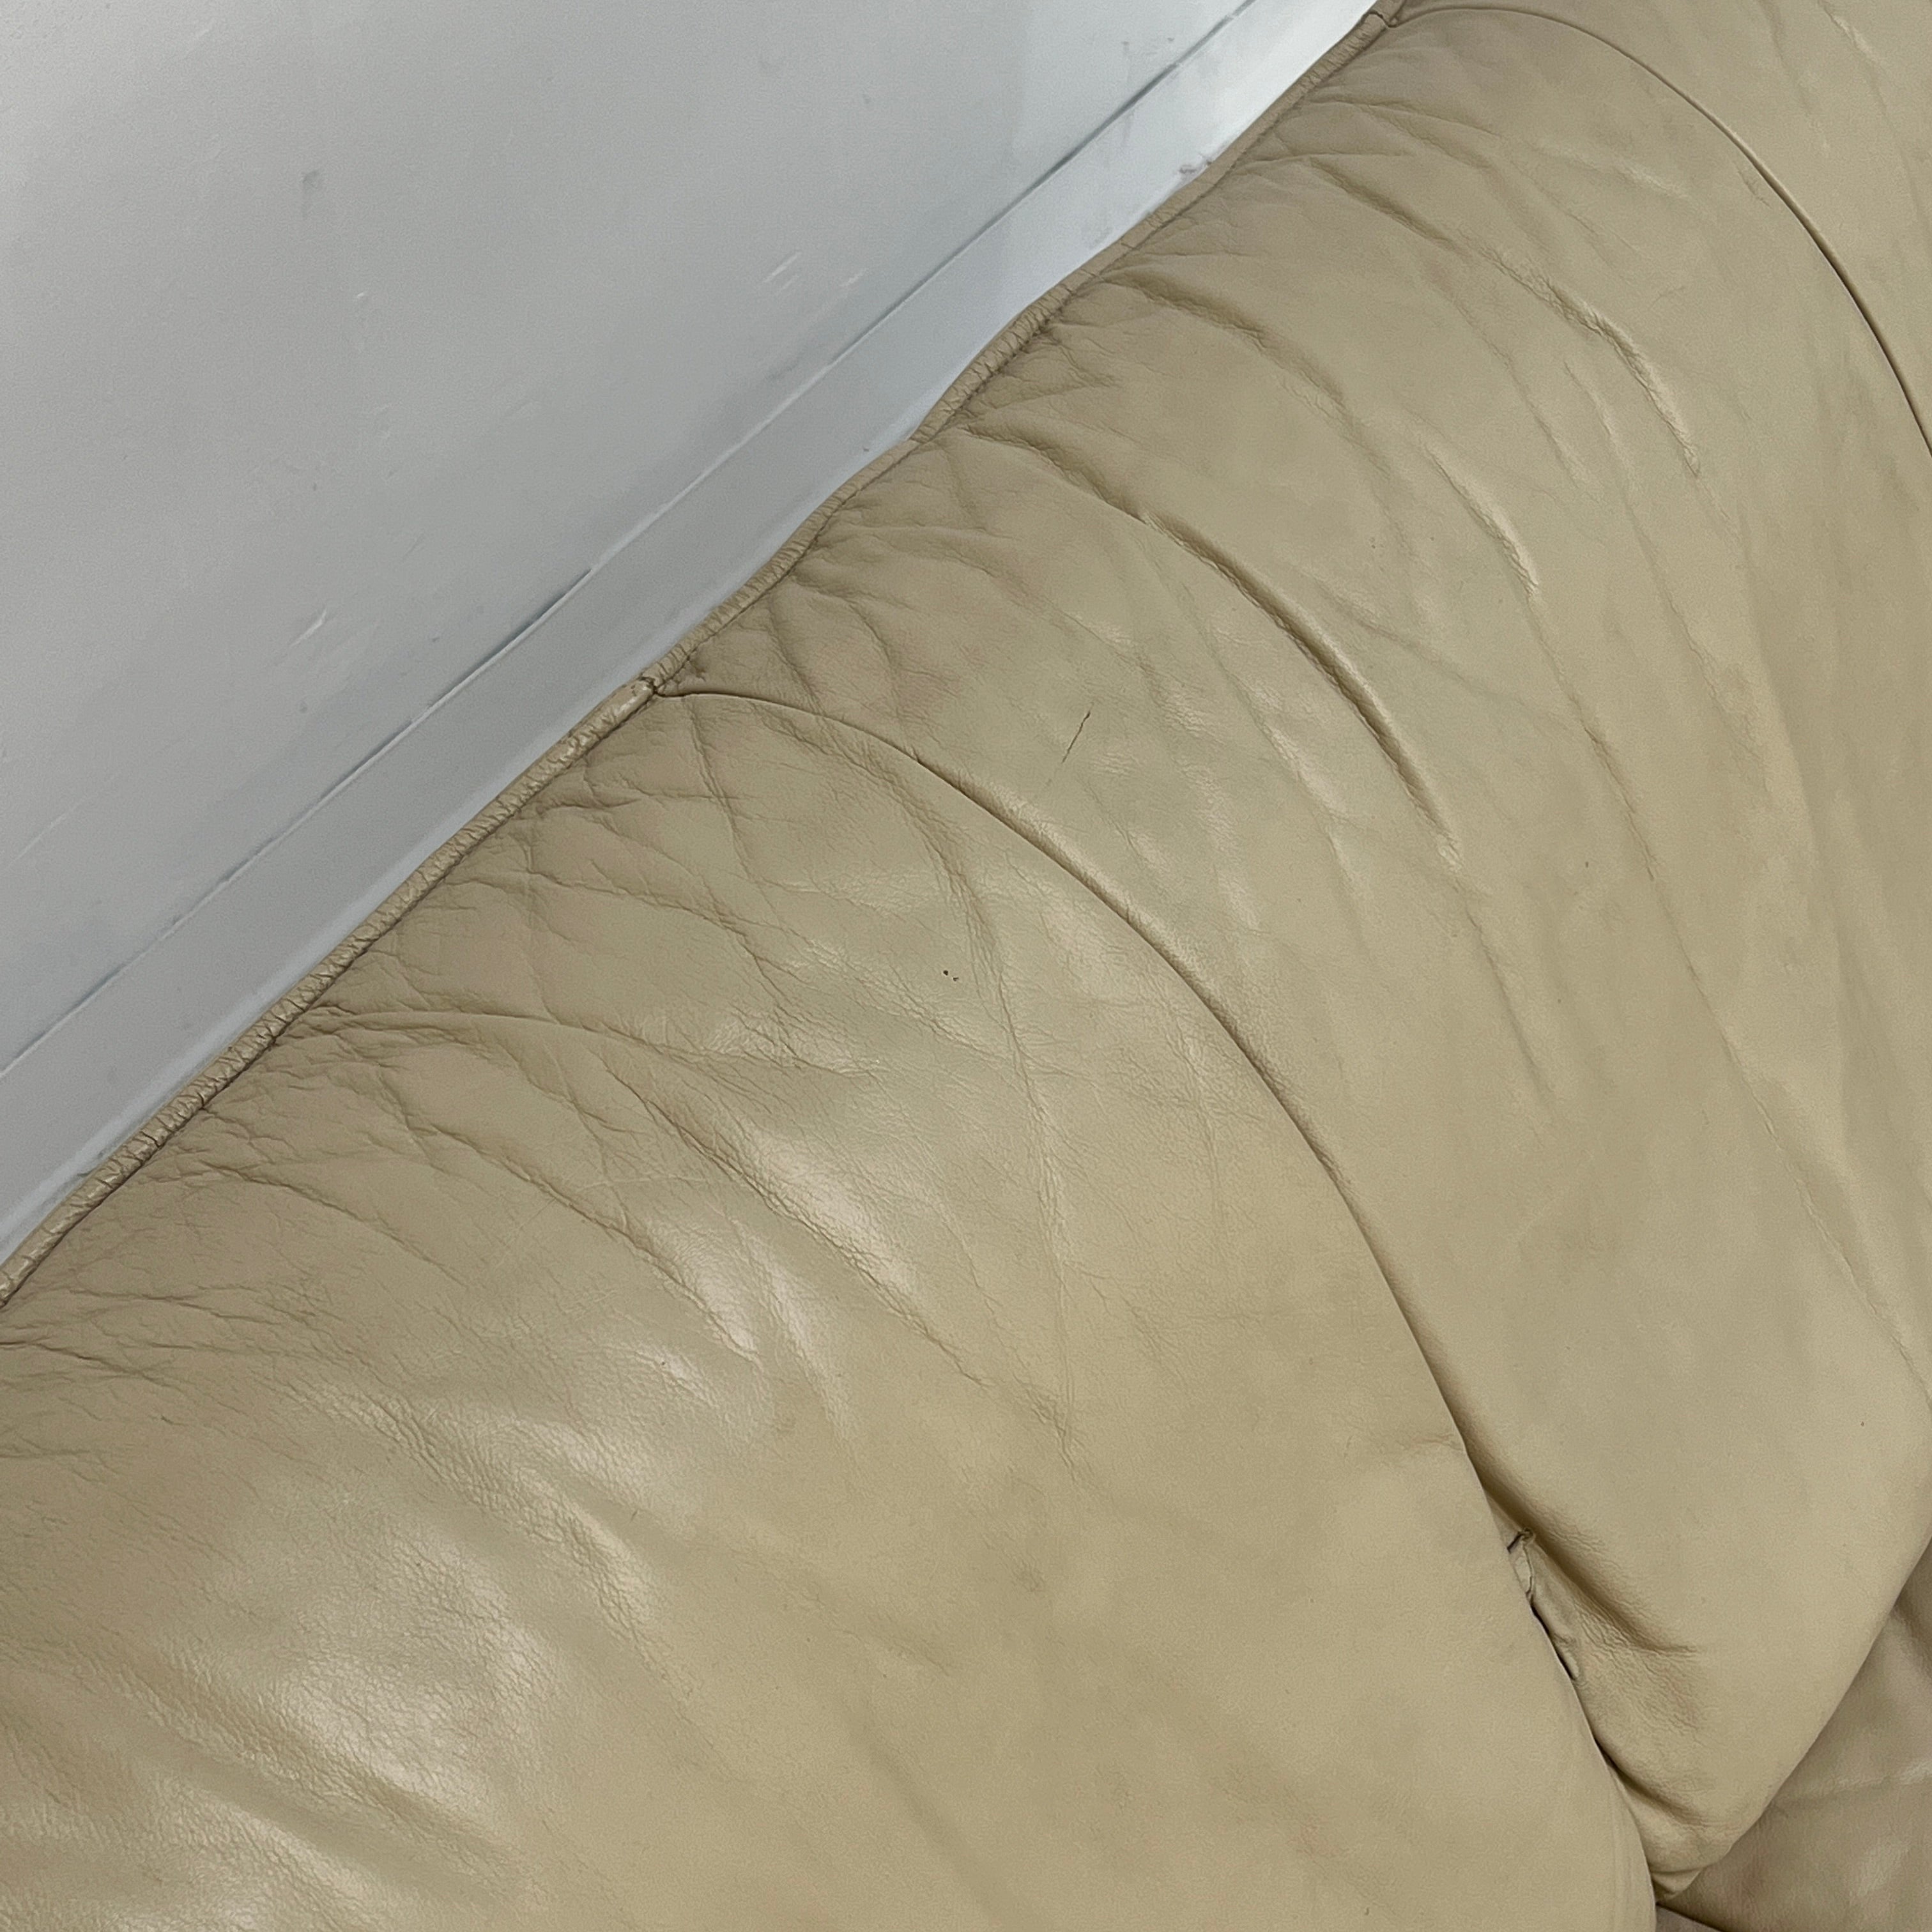 Post Modern Off White / Beige Leather Sofa